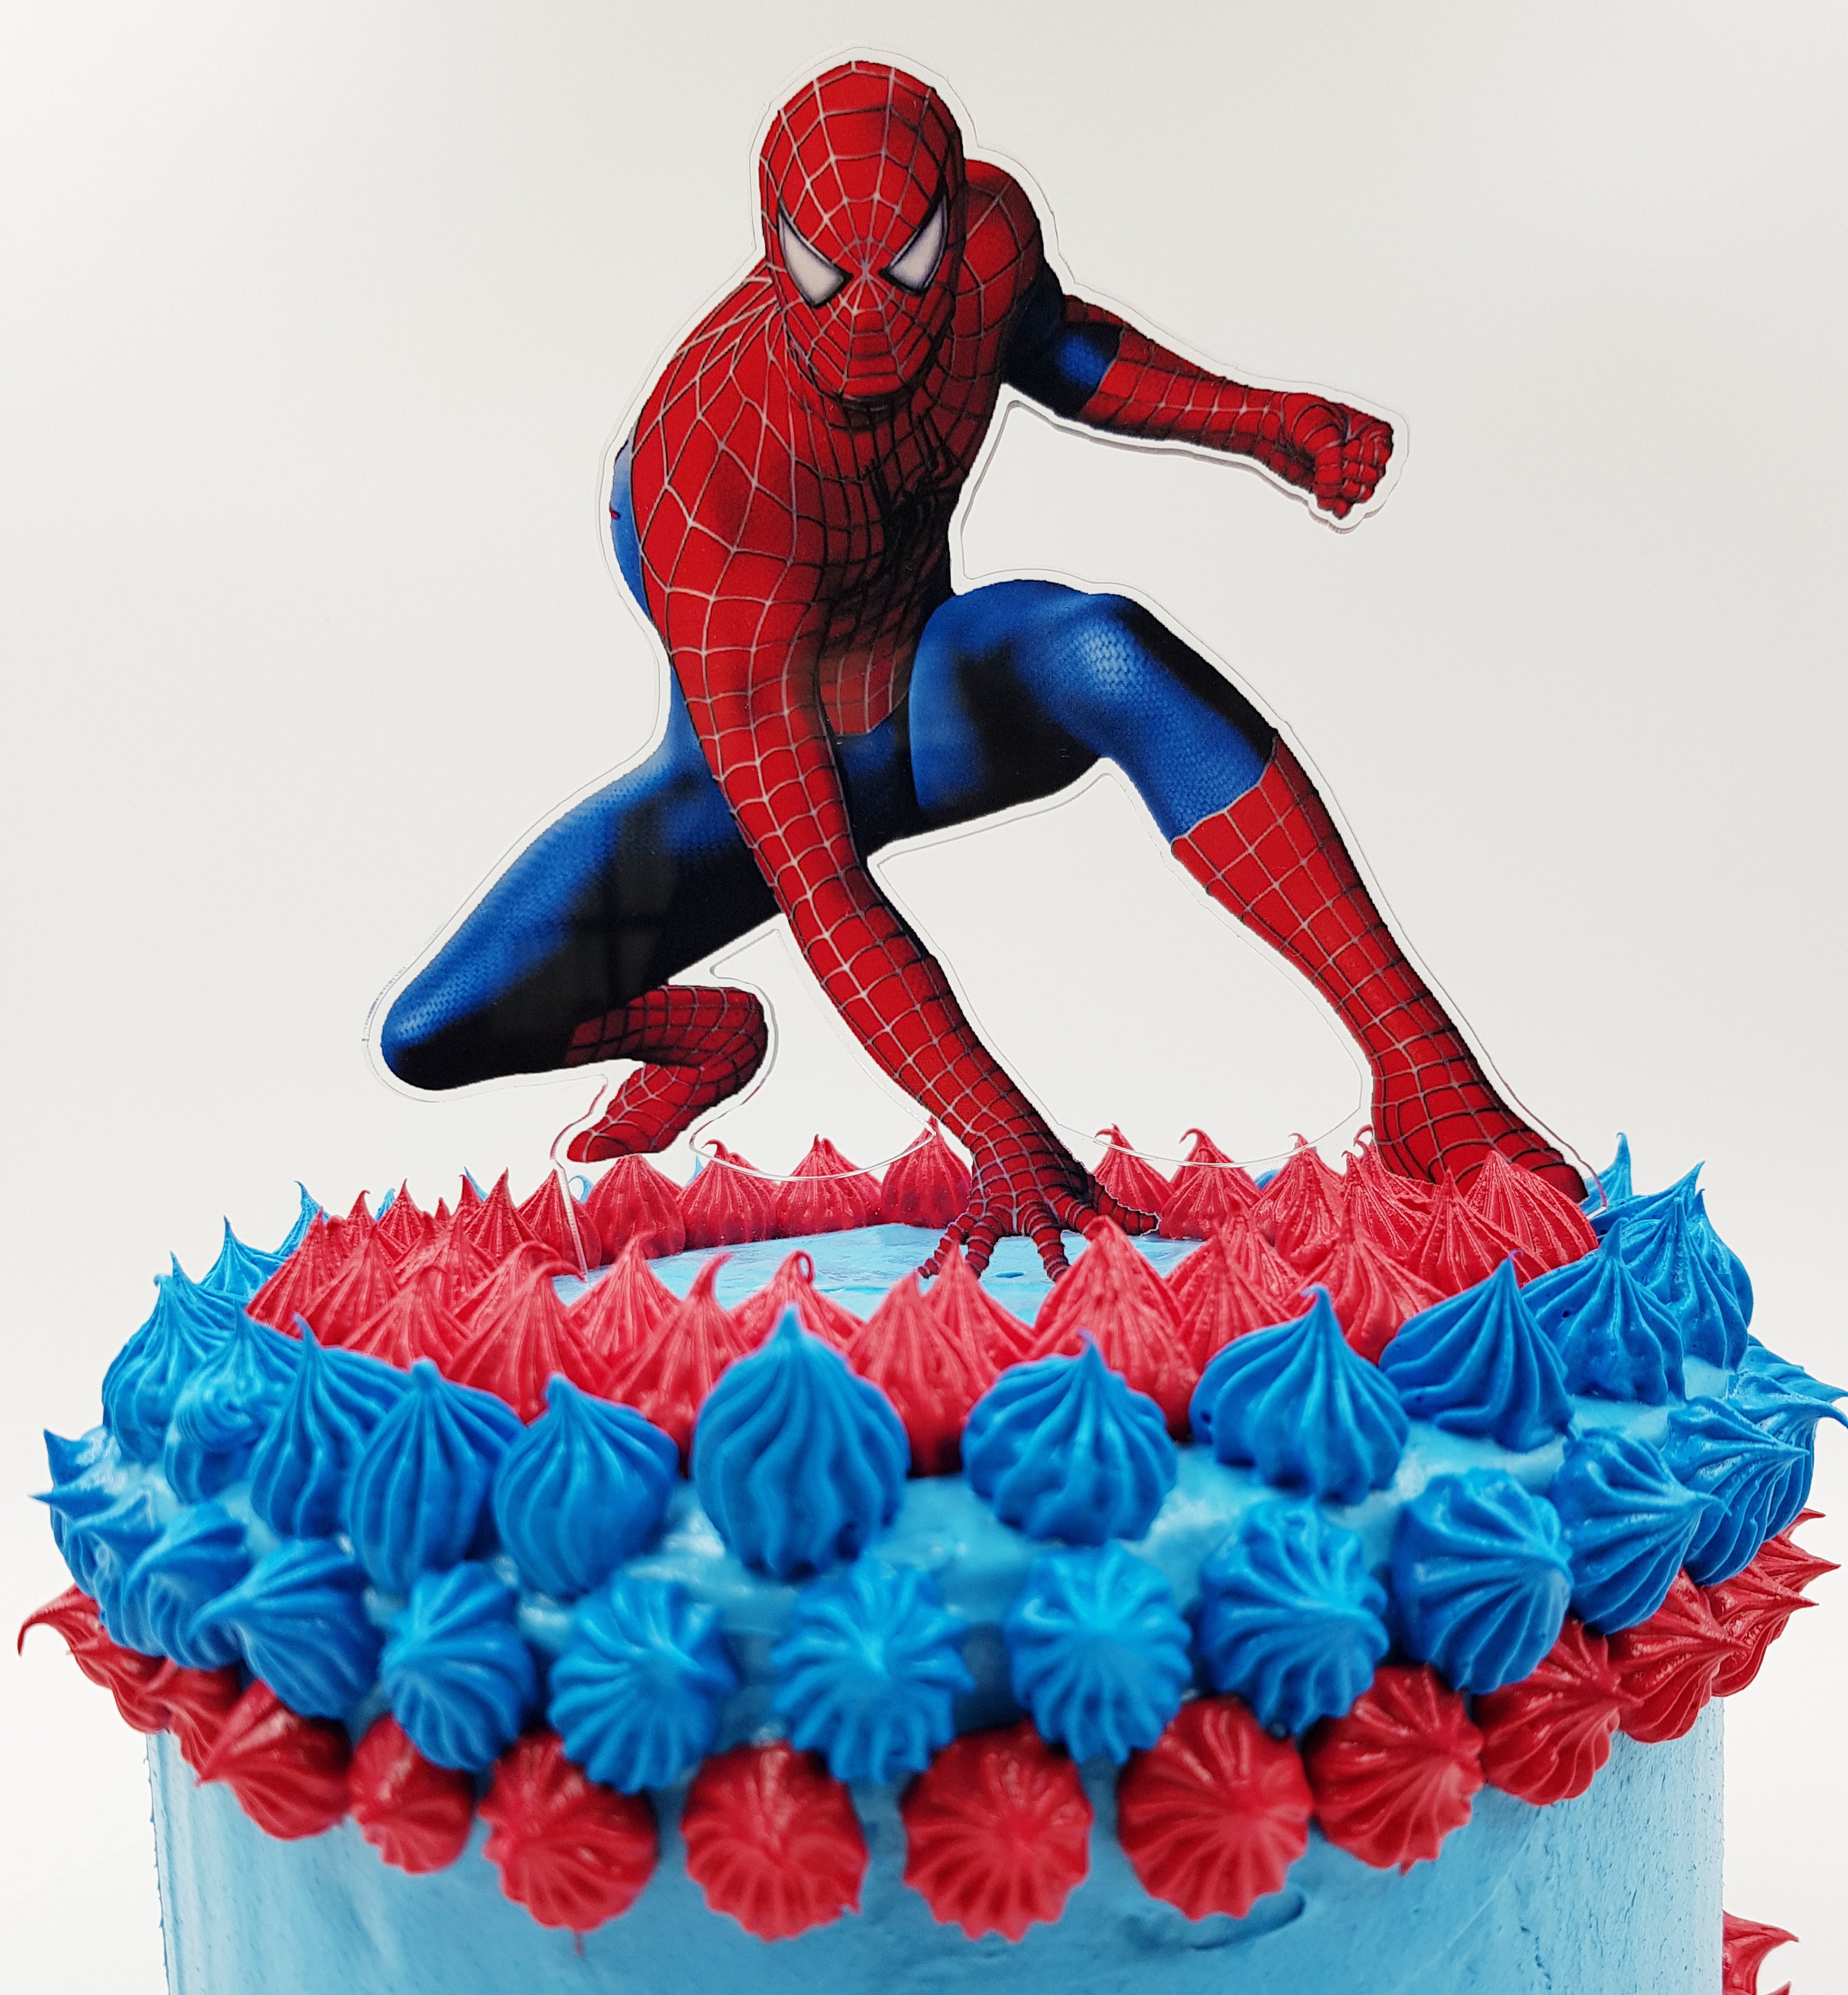 Spider Man Cake Design Ideas | Red Gel Cake Decorating making by Cool Cake  Master - YouTube